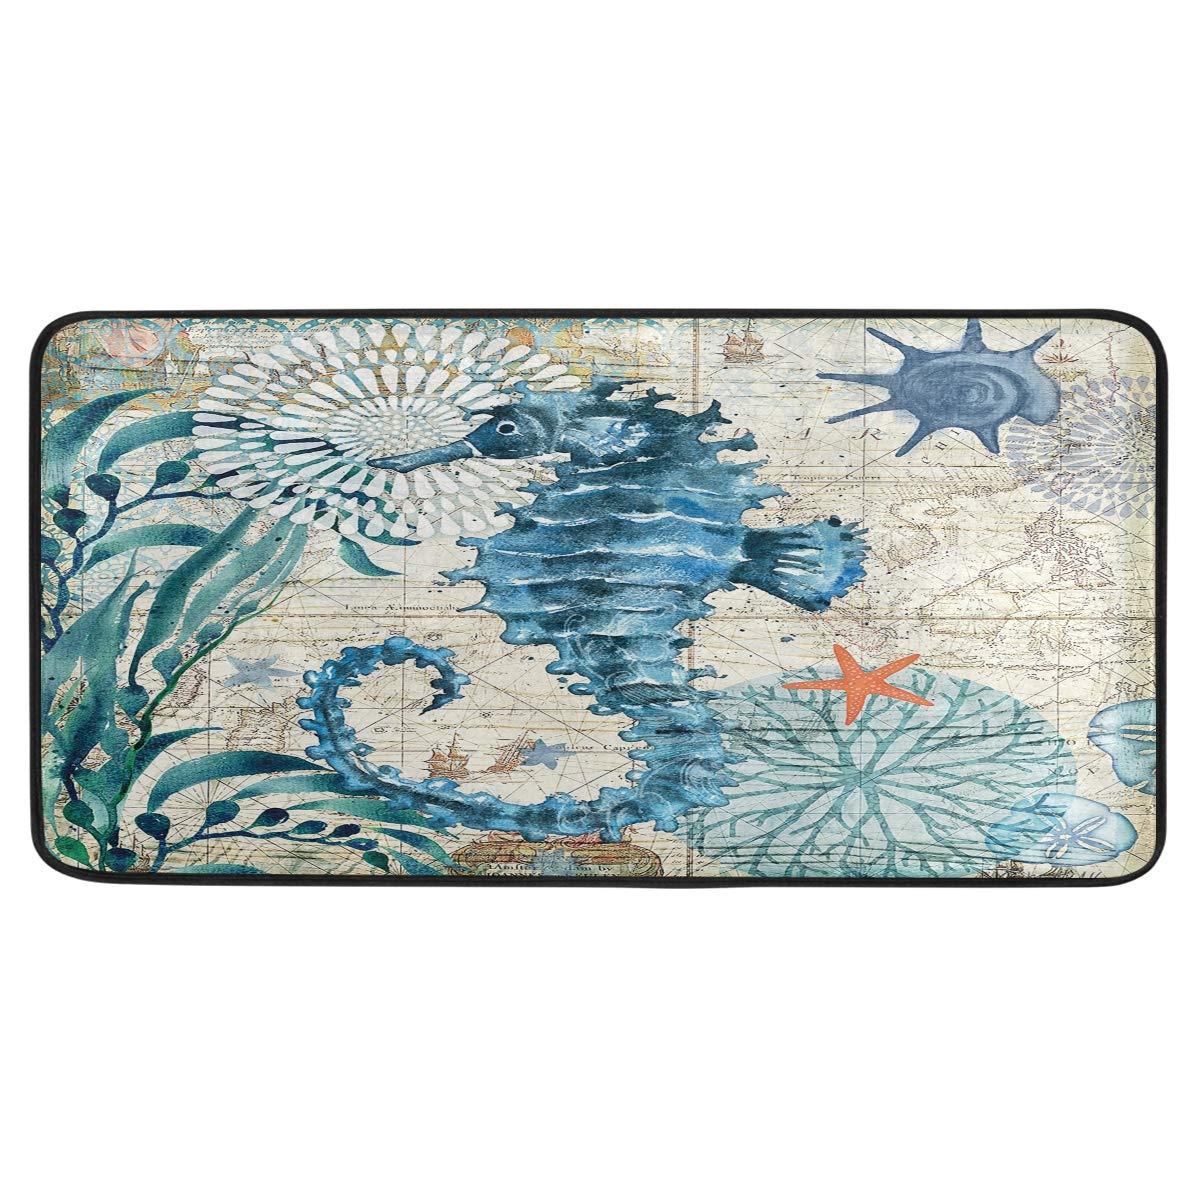 Kitchen Rugs Watercolor Blue Seahorse Design Non-Slip Soft Kitchen Mats Bath Rug Runner Doormats Carpet for Home Decor, 39" X 20"